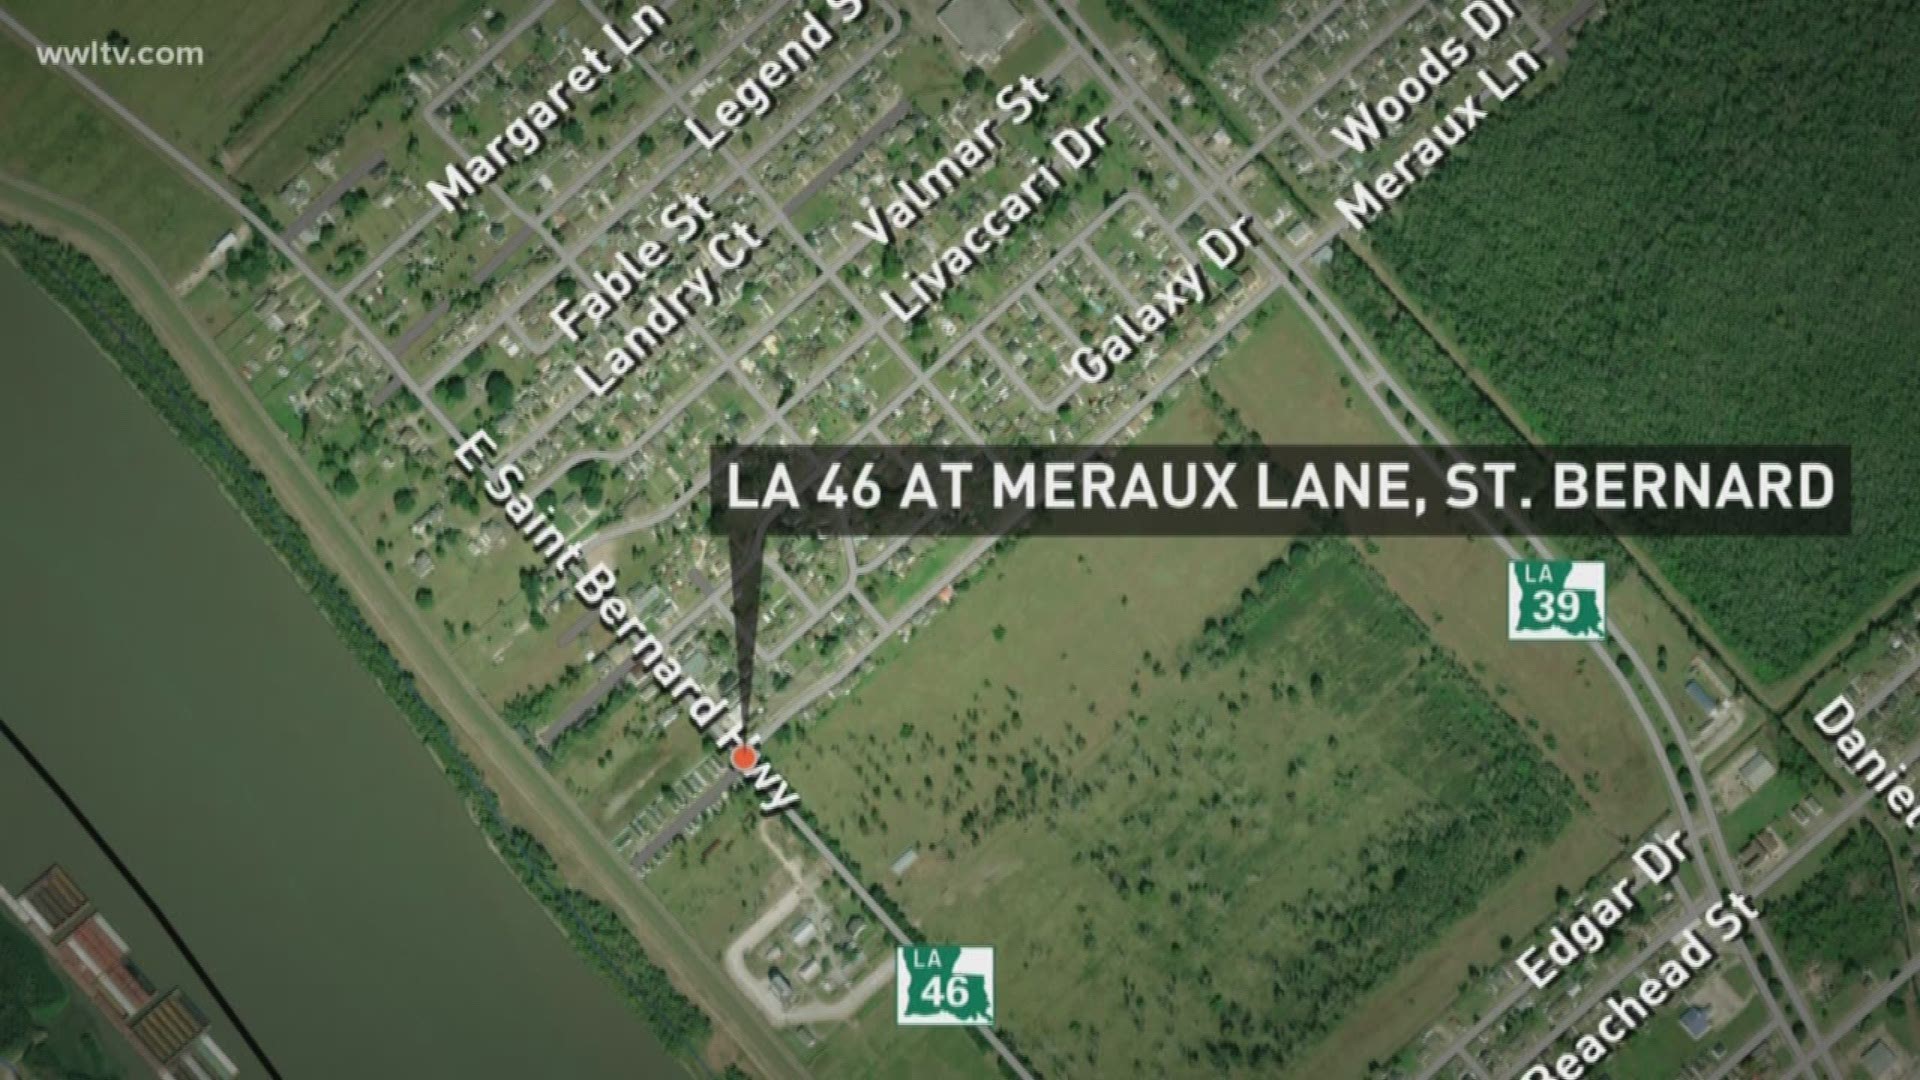 According to Louisiana State Police, the crash happened around 5:45 p.m. Tuesday on LA 46 near Meraux Lane.